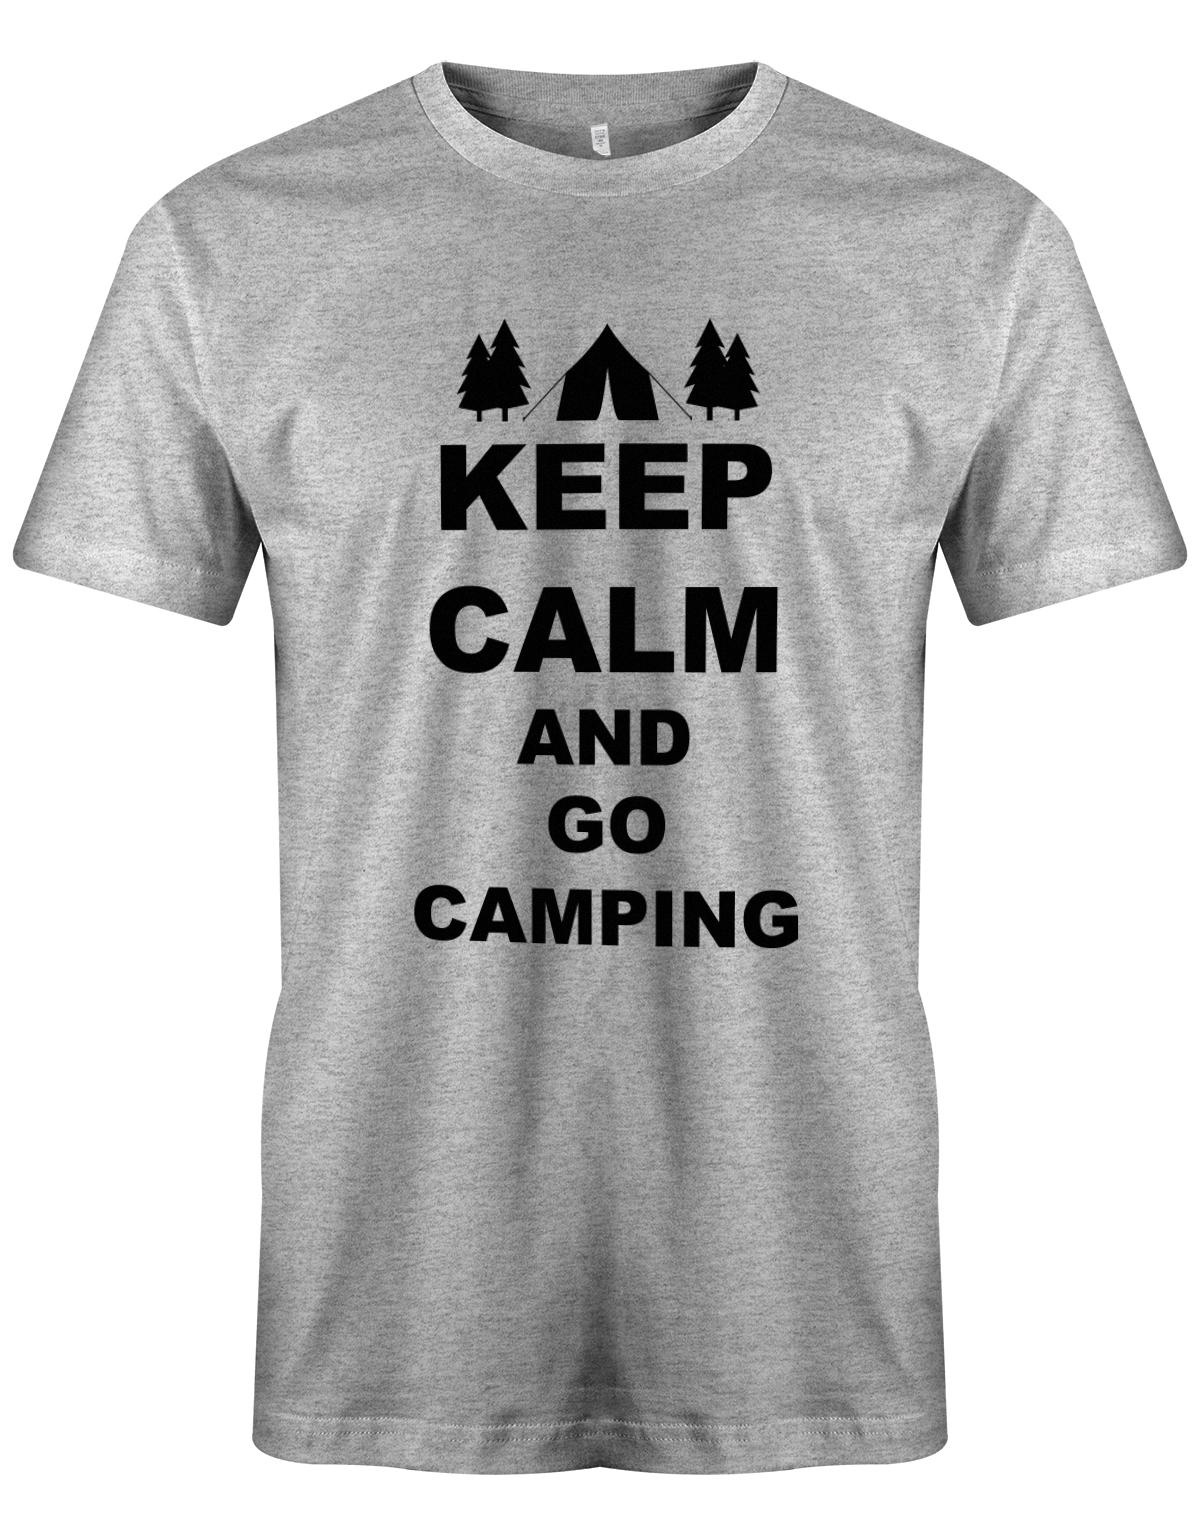 Keep-Calm-and-Go-Camping-Herren-Shirt-Grau